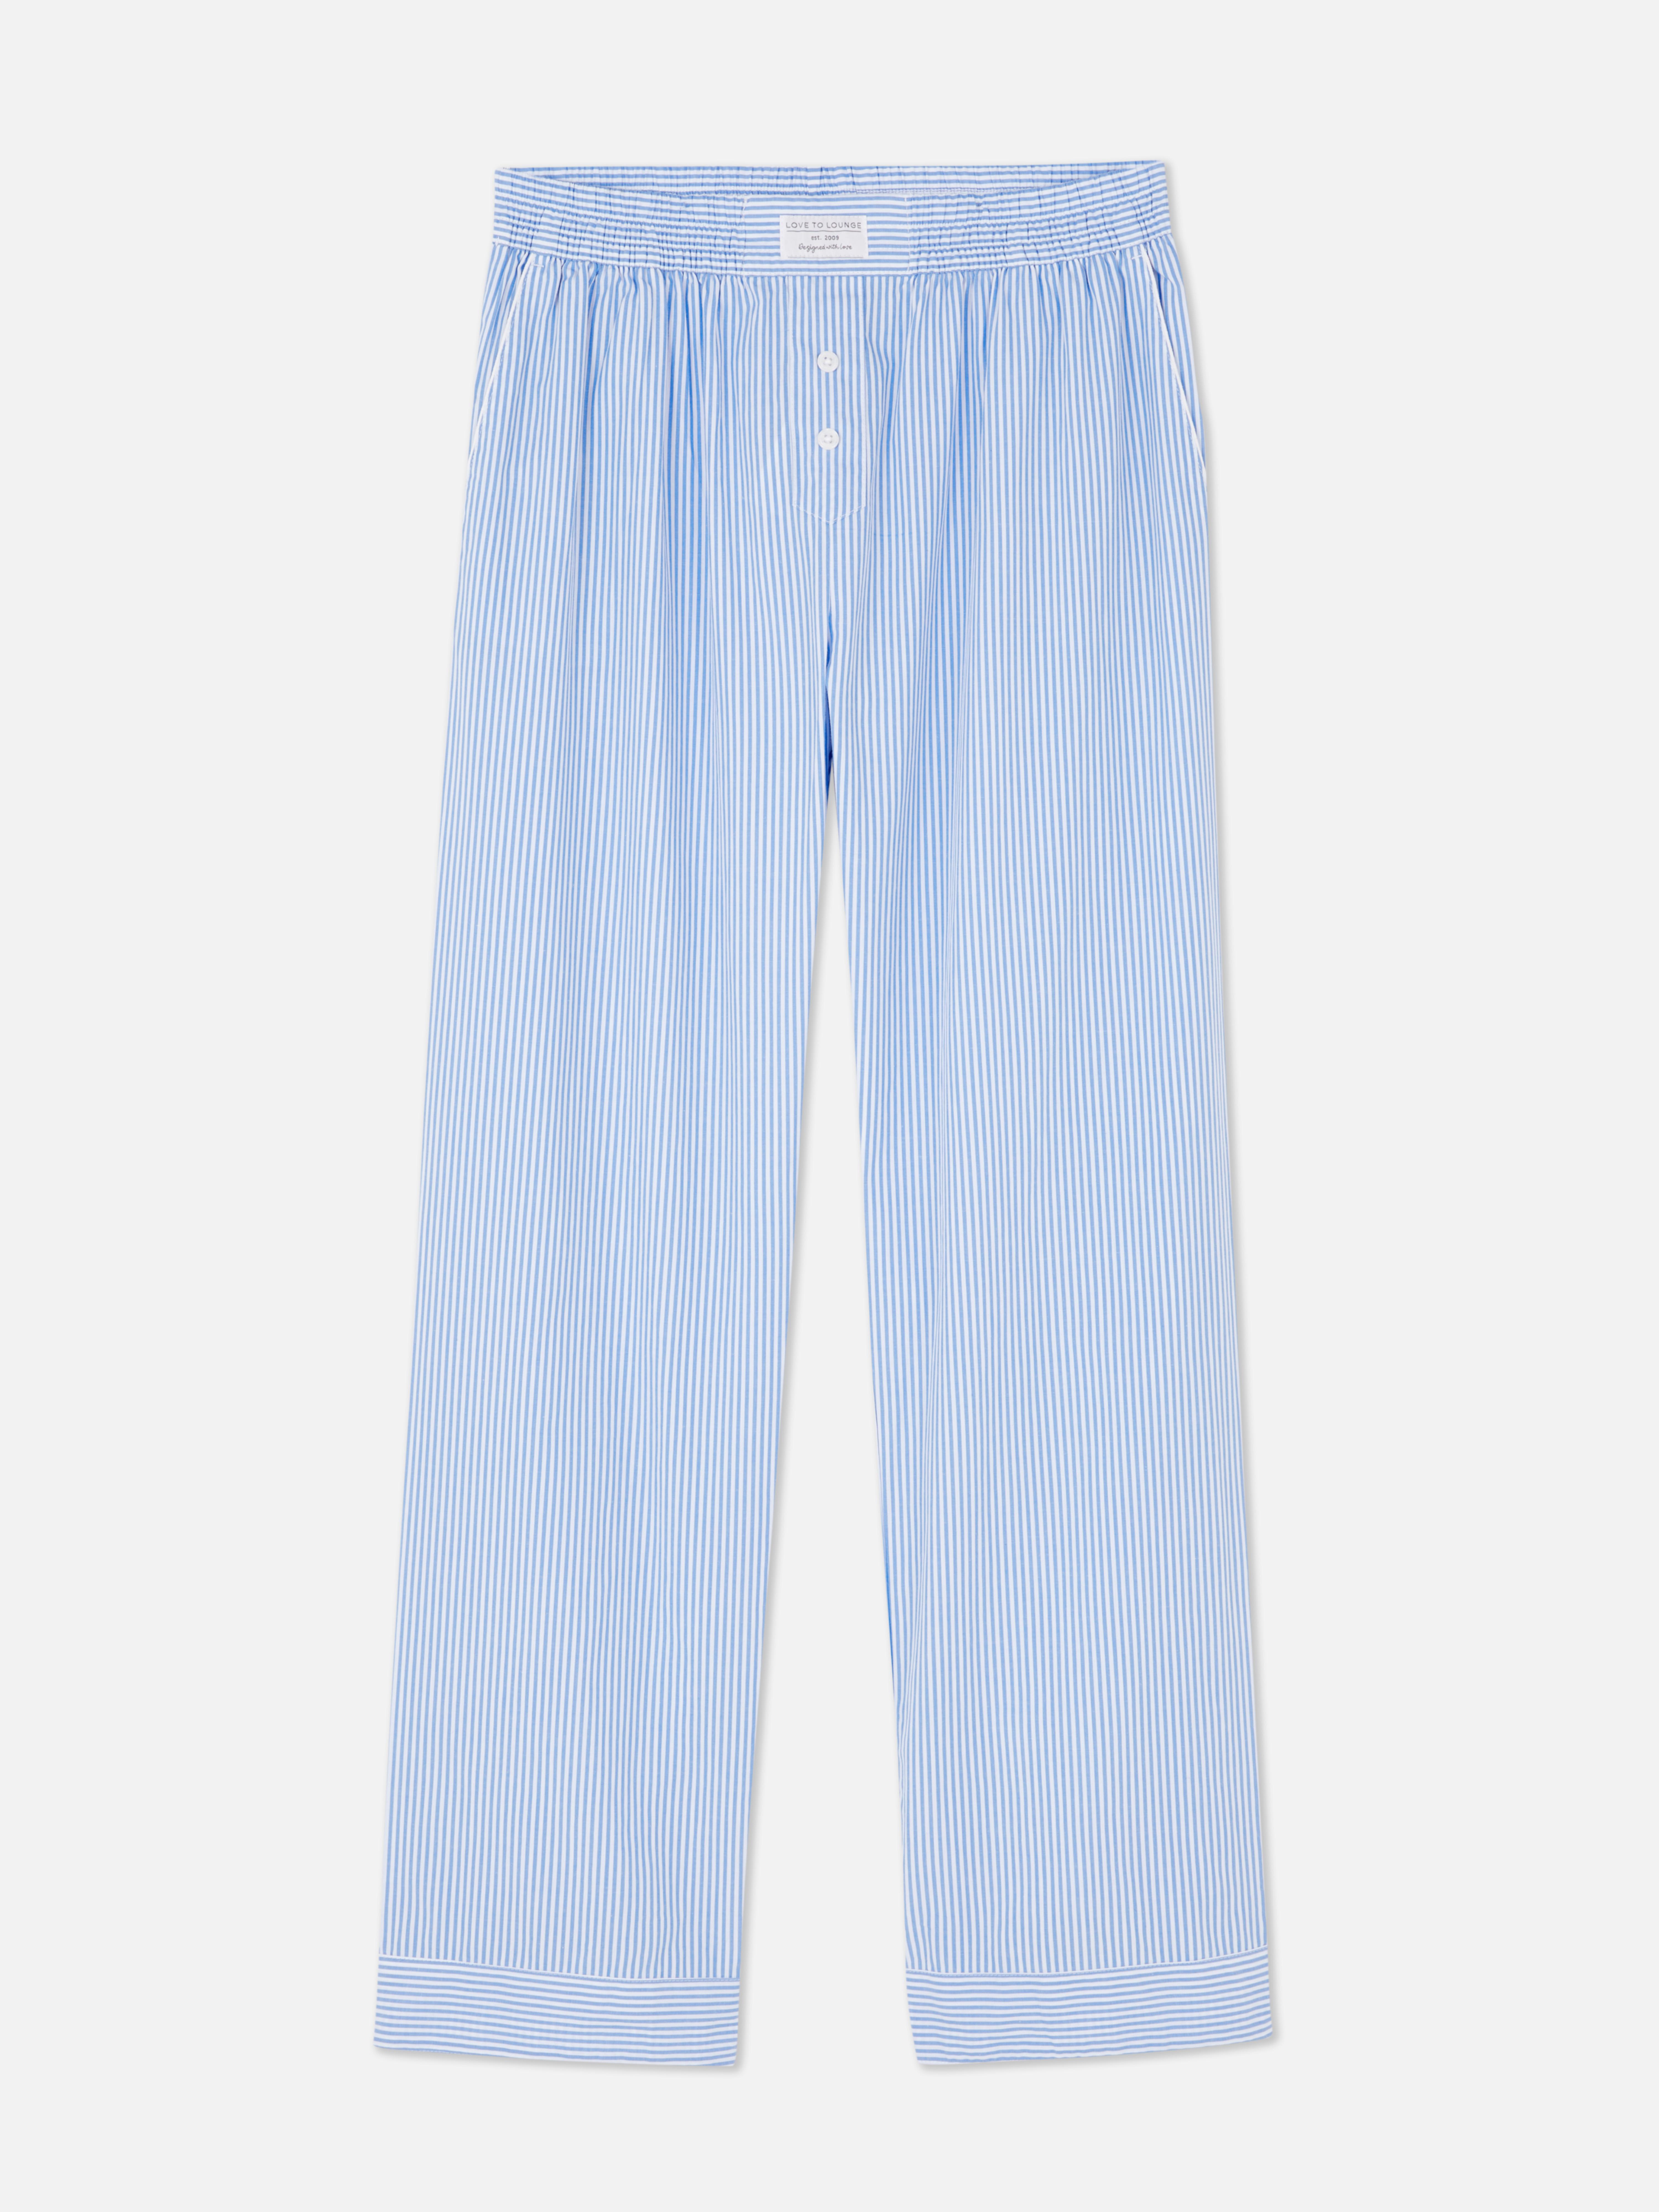 Pruhované pyžamové kalhoty s rovnými nohavicemi